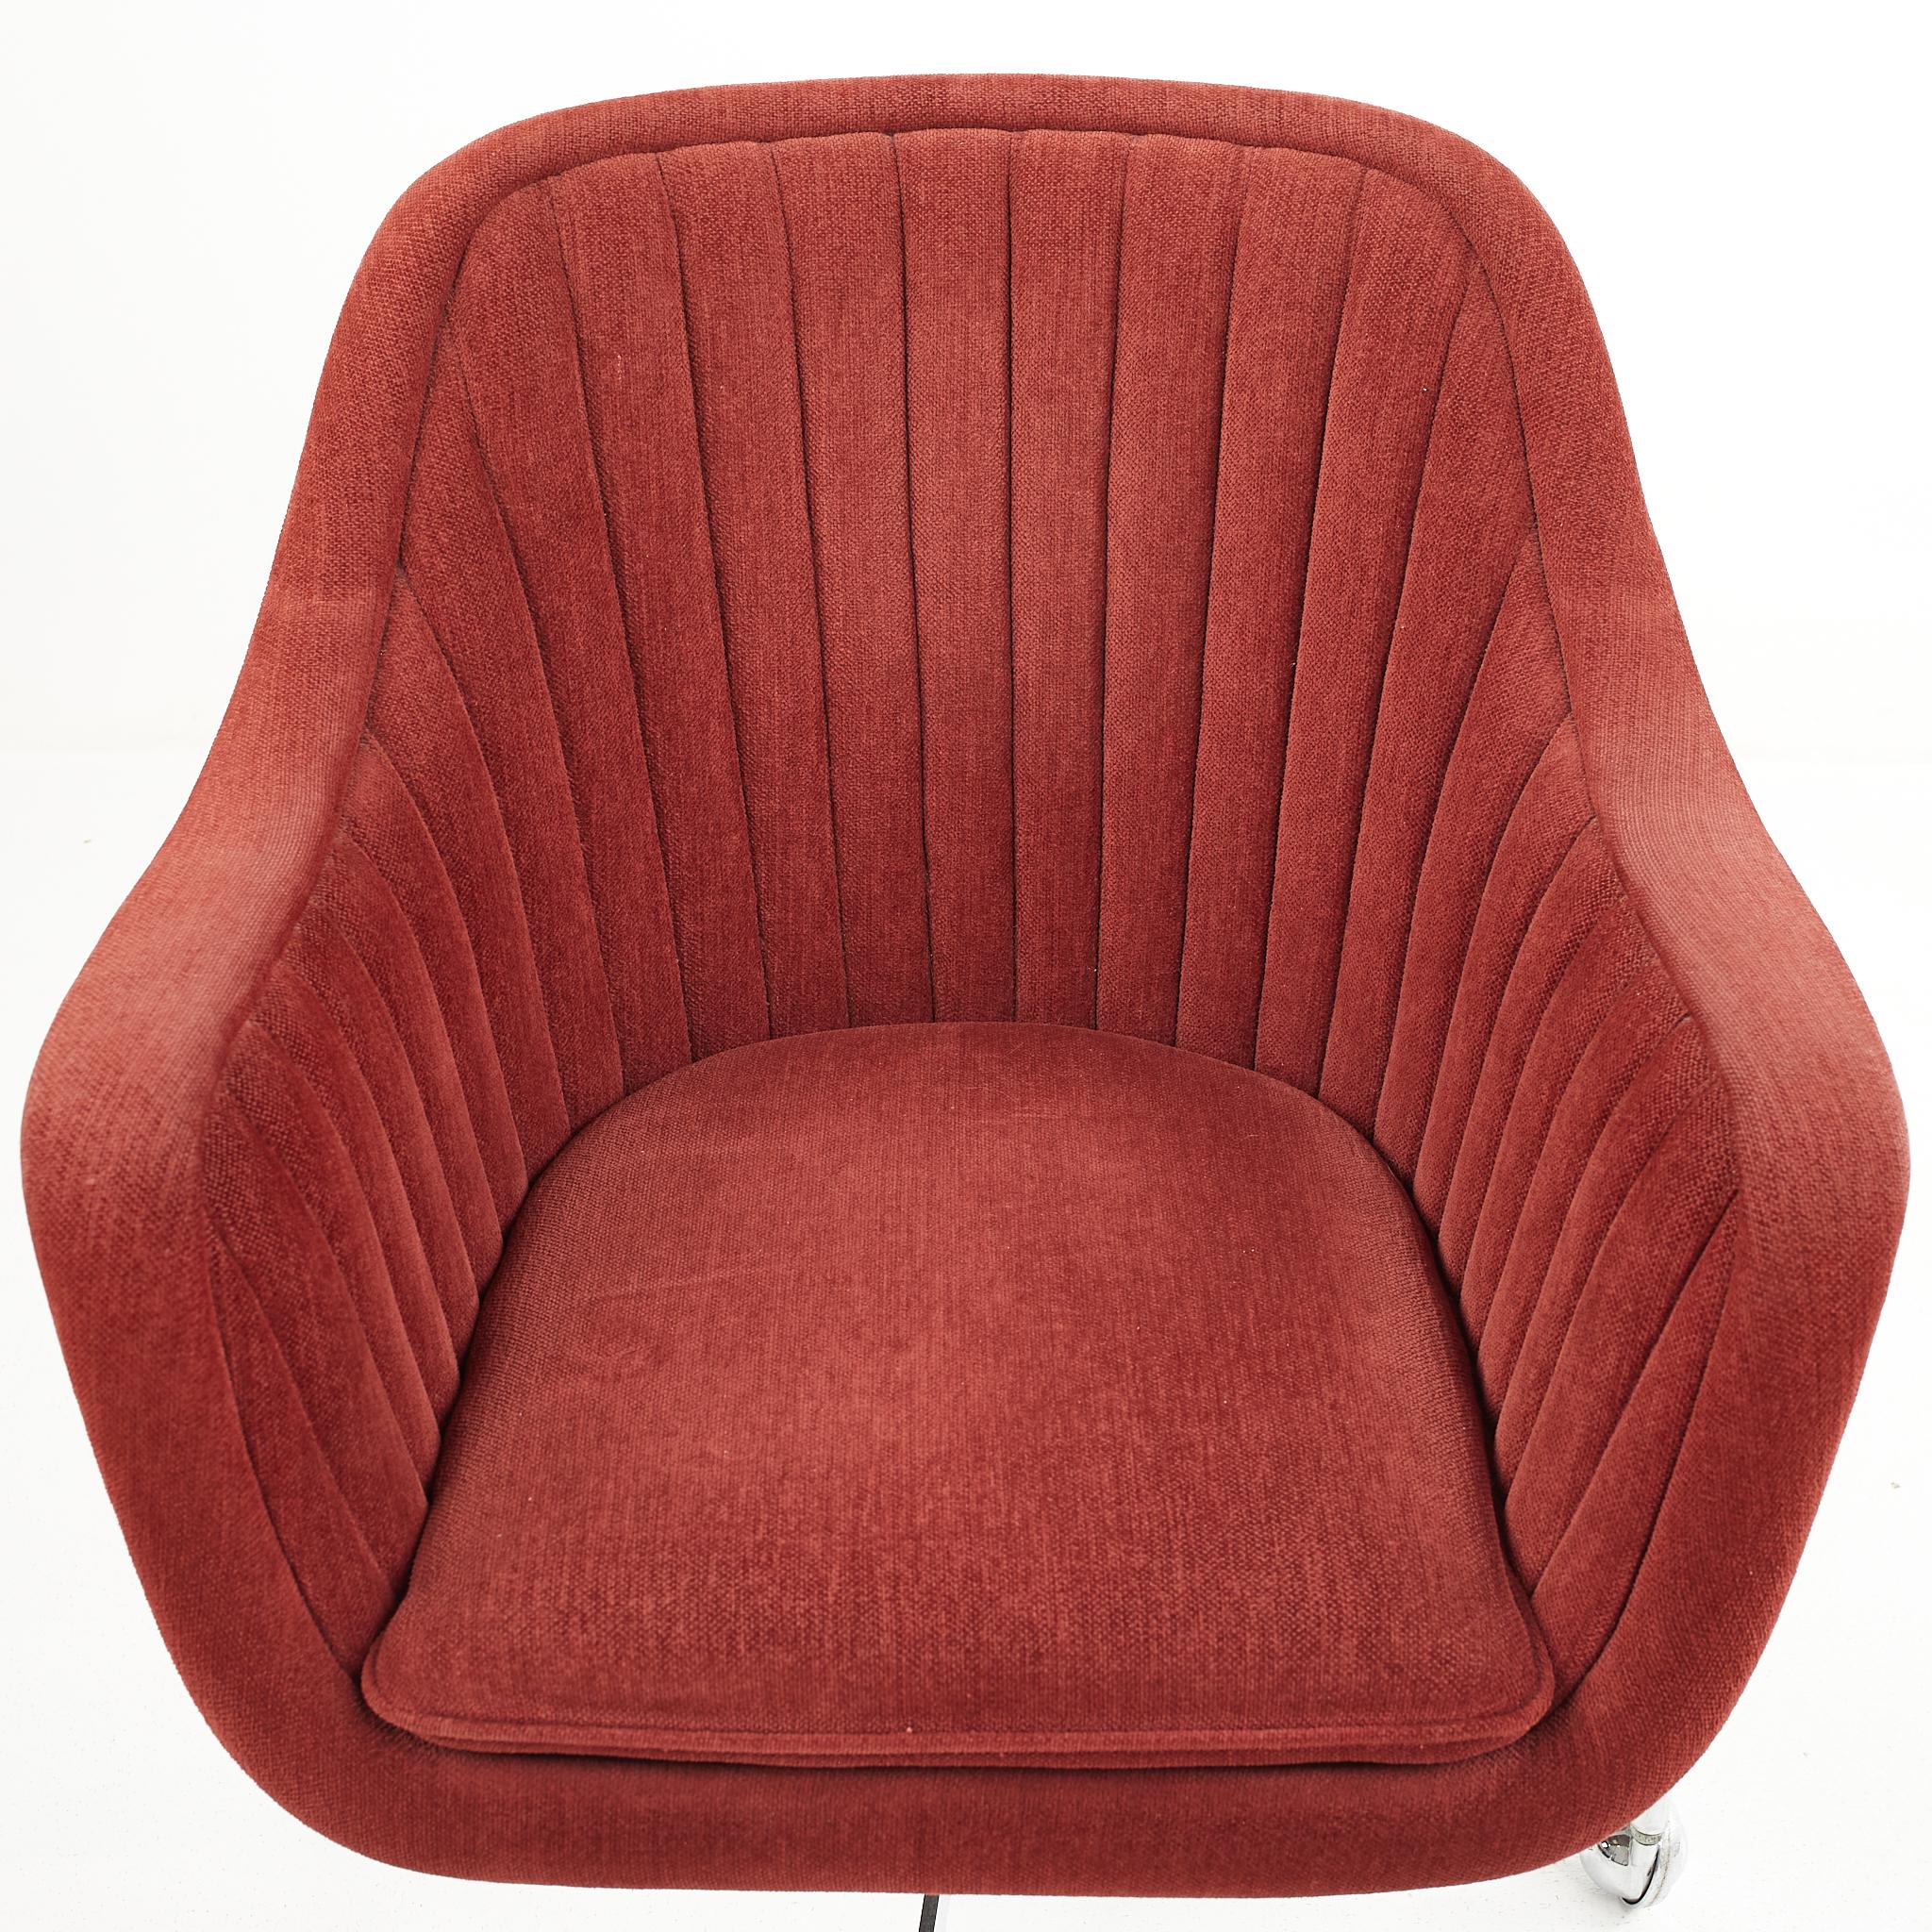 Upholstery Brickel Associates Mid Century Office Chair